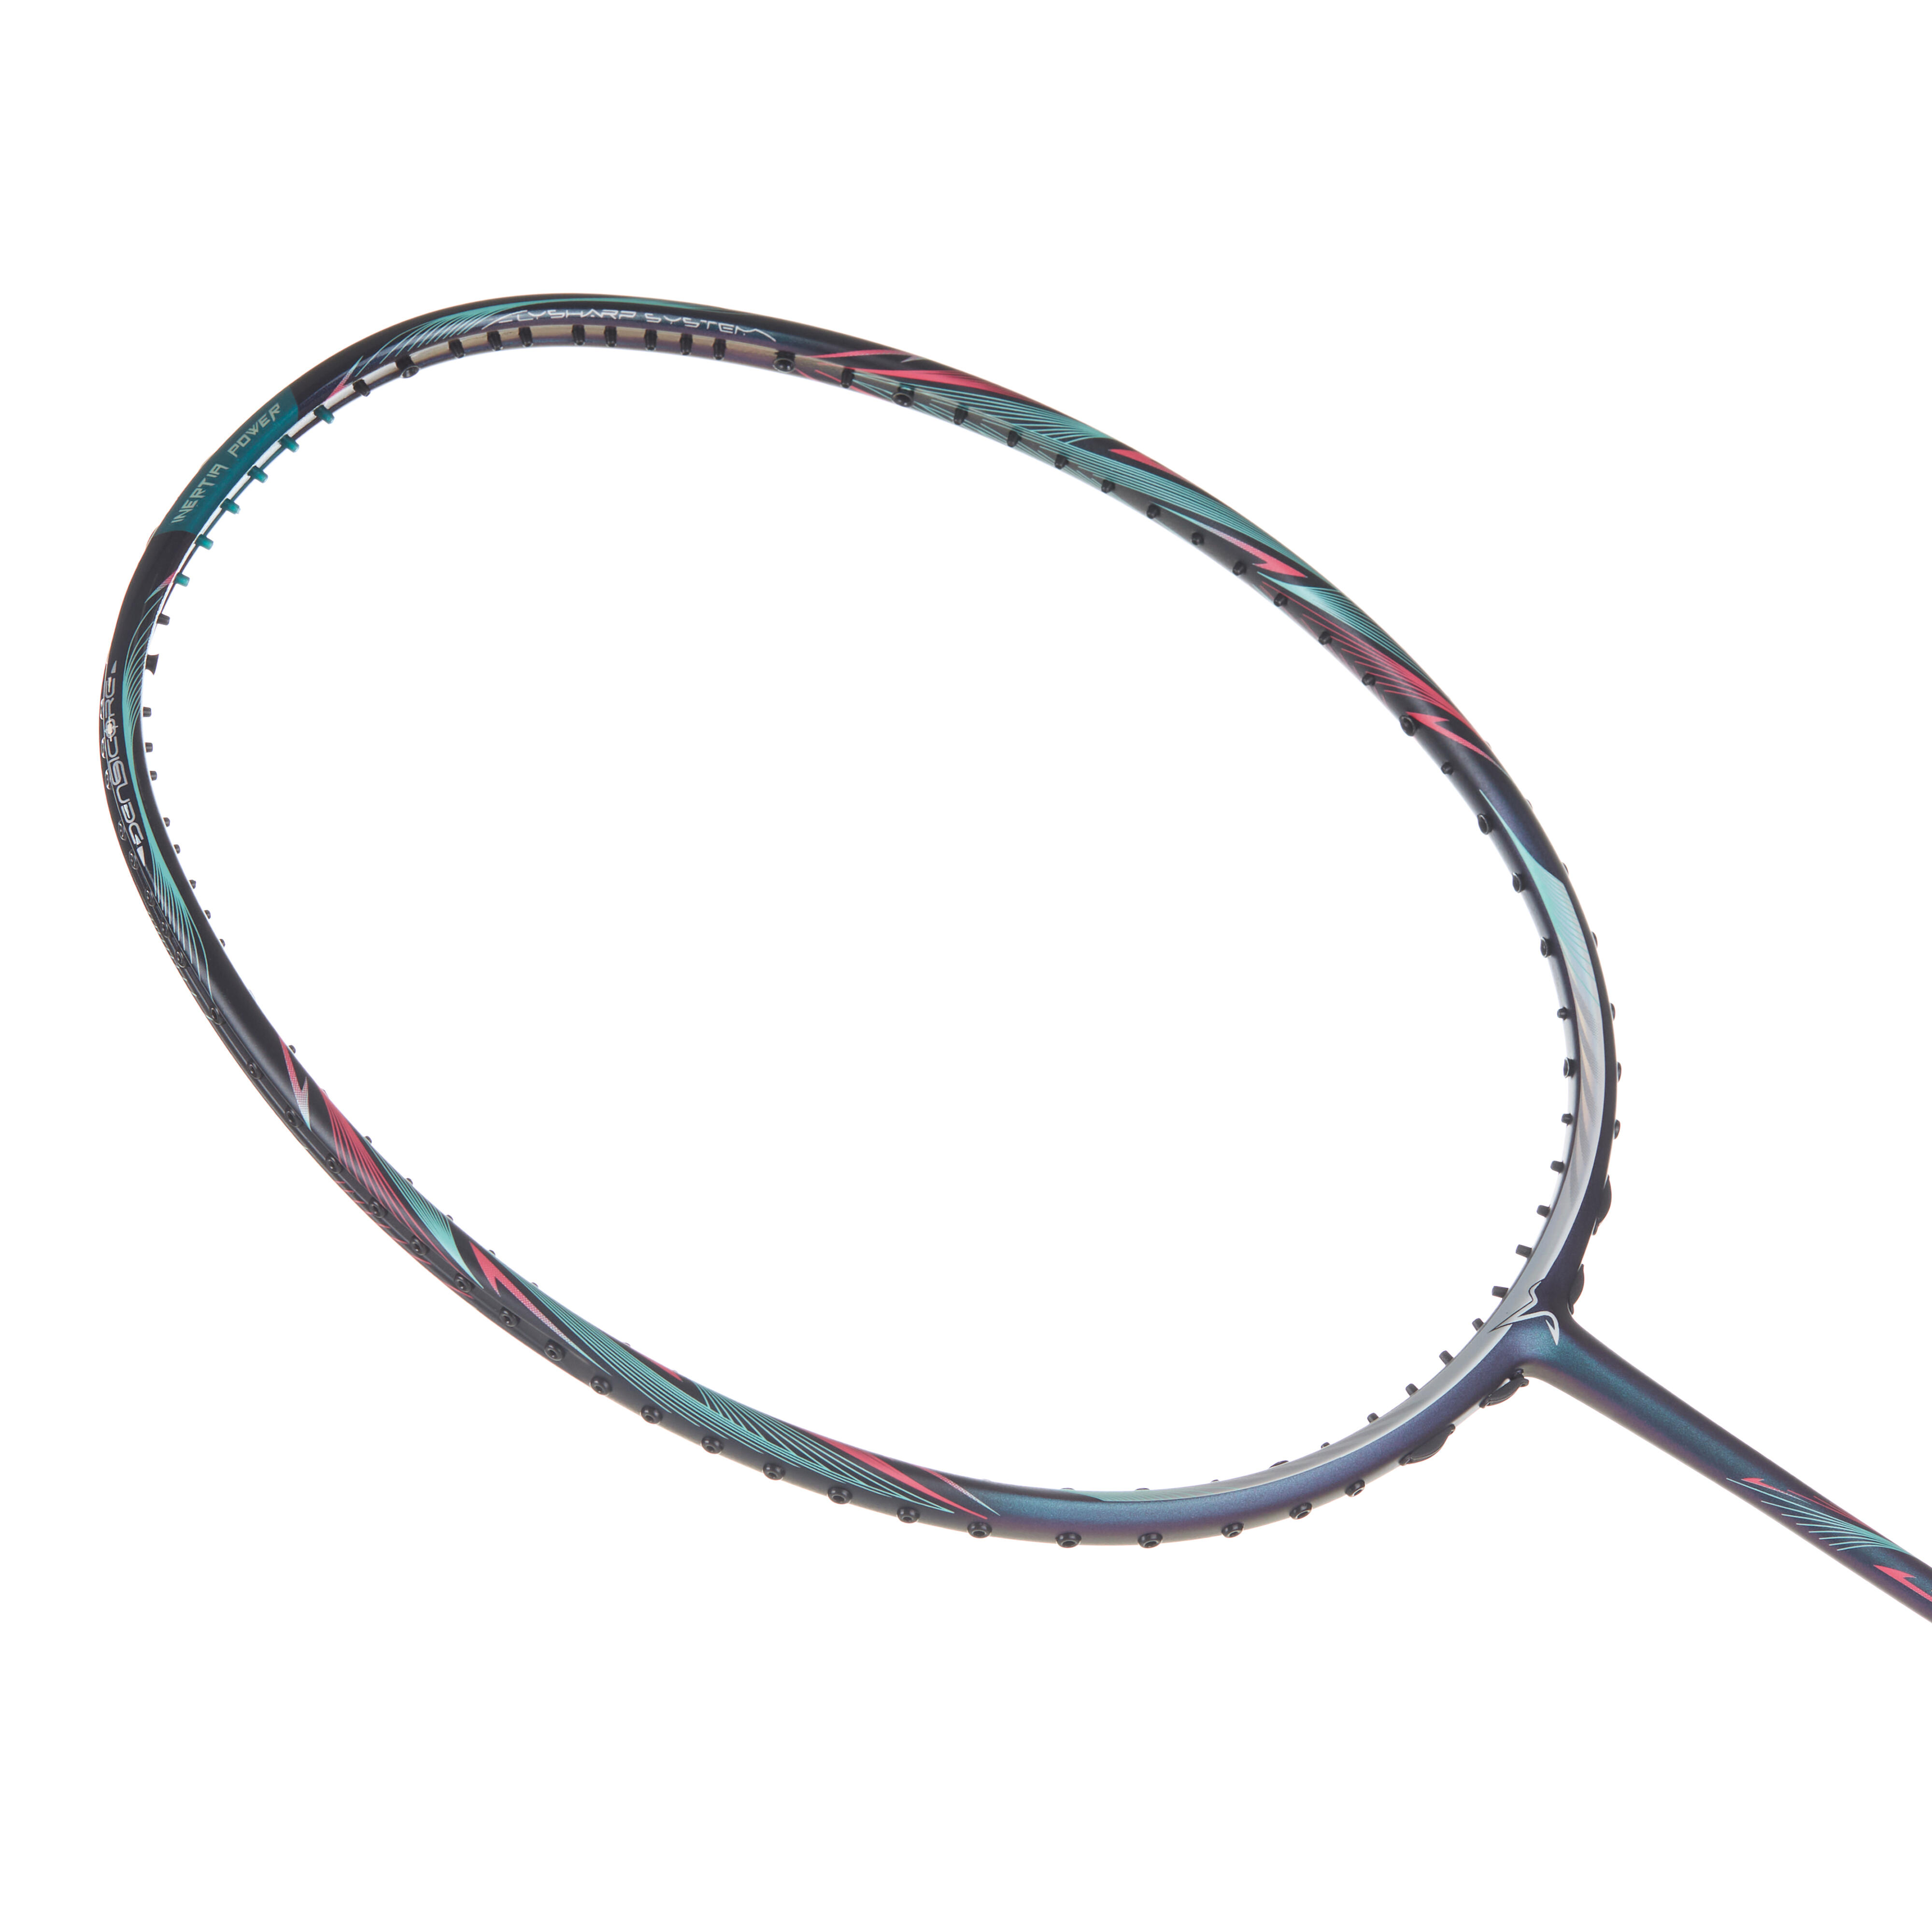 Unstrung Badminton Racket - BR Perform 990 Pro Purple - PERFLY